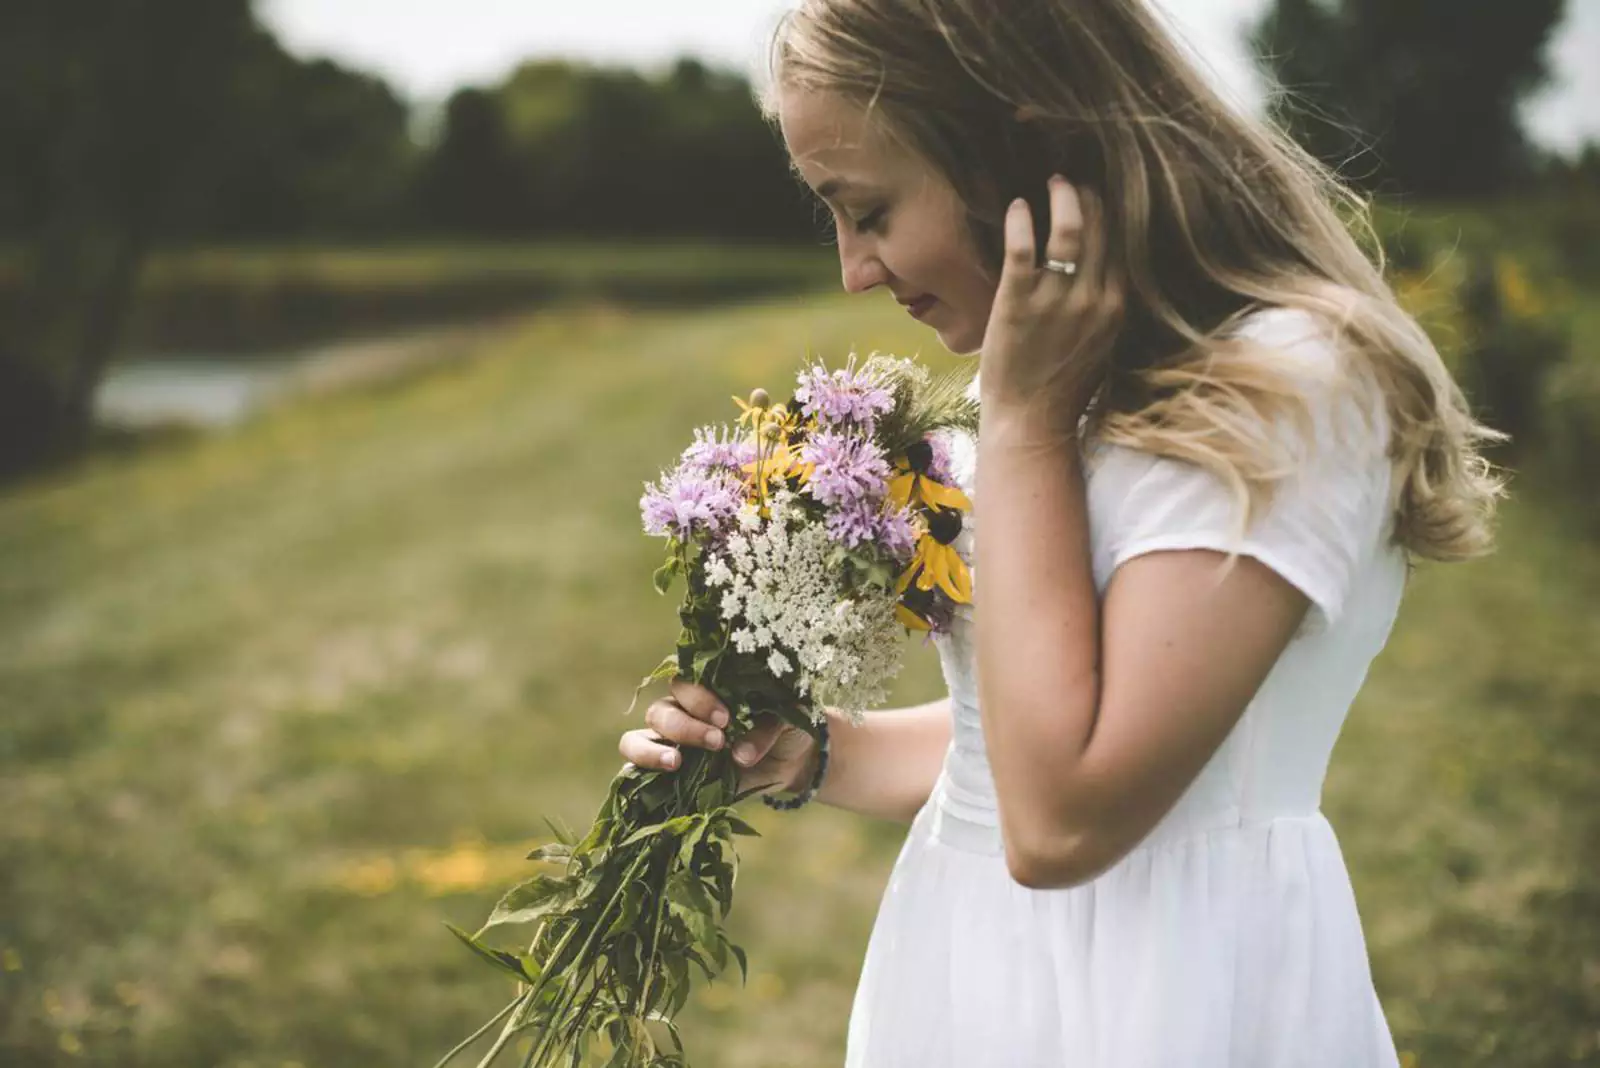 Девушка нюхает цветы.